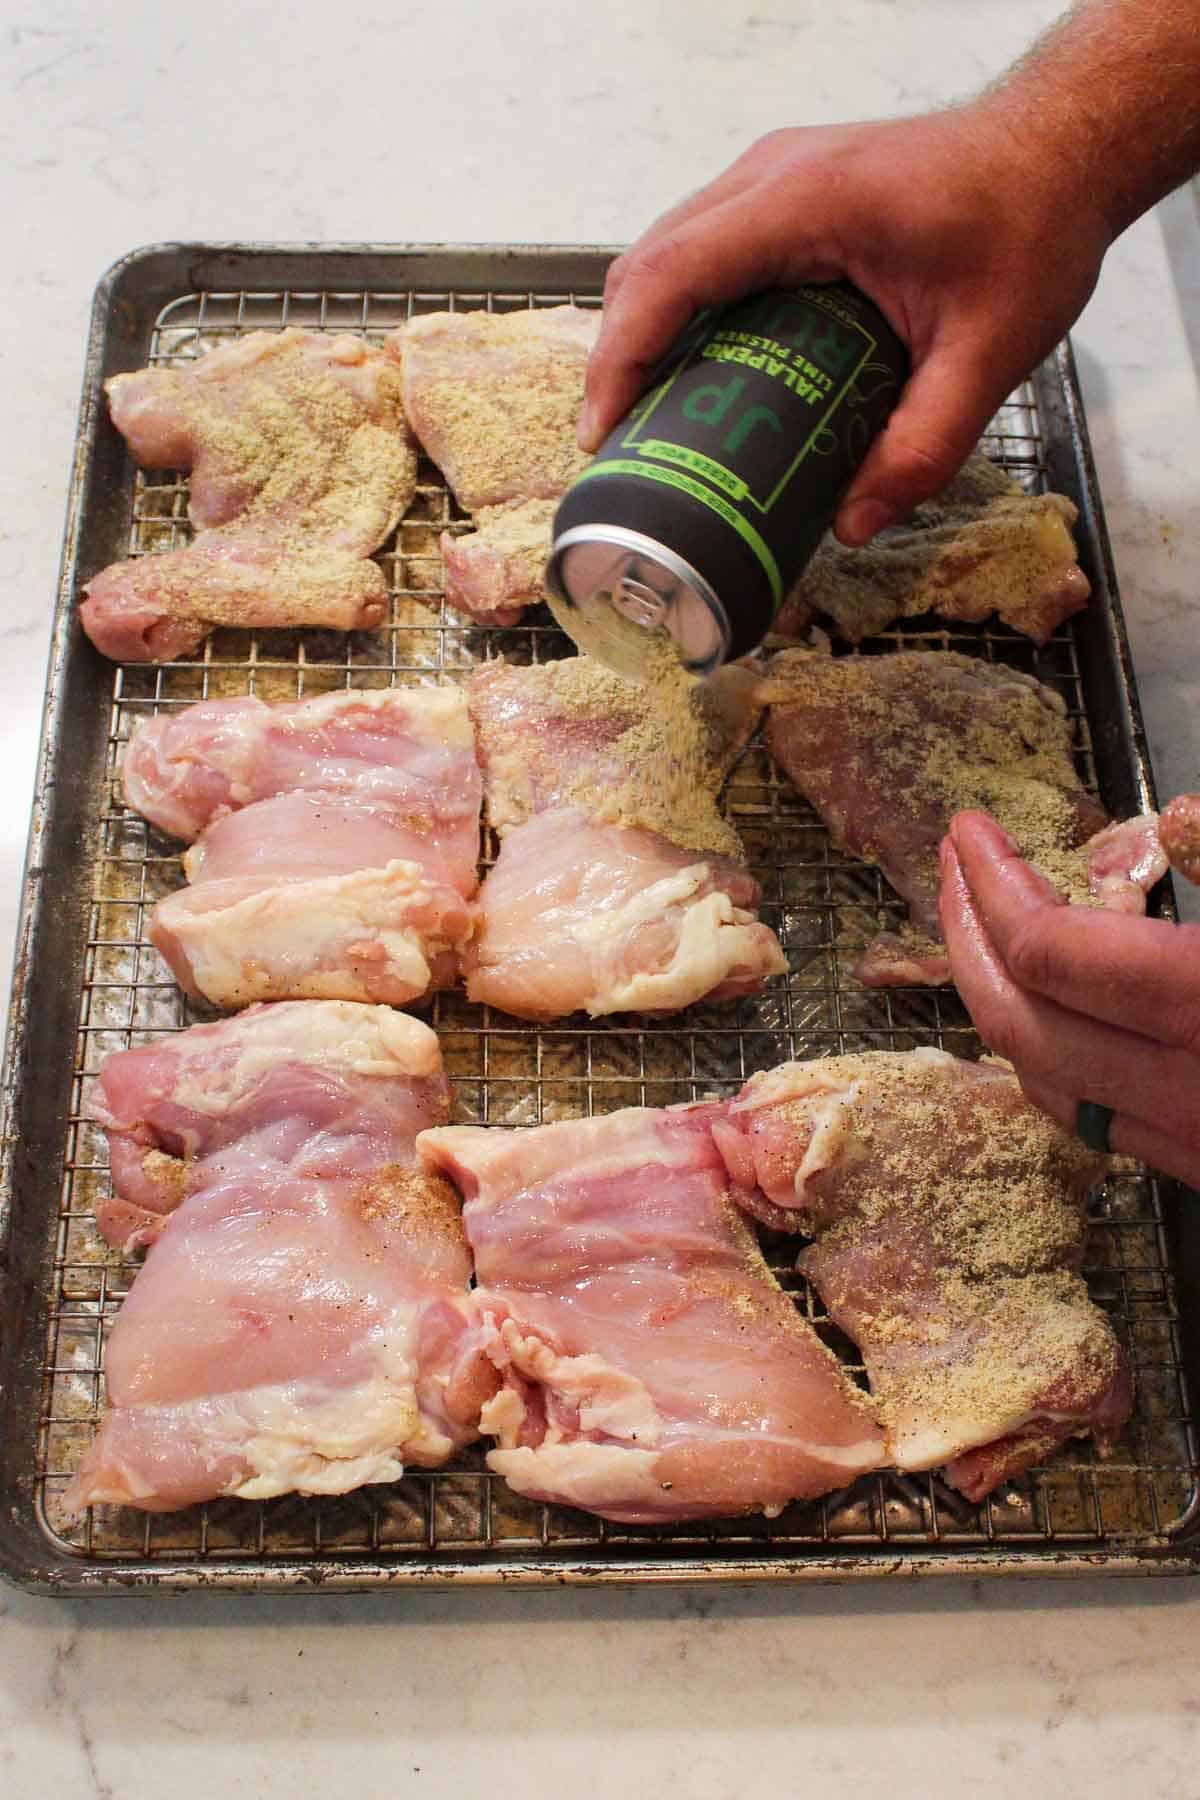 Seasoning the raw chicken with Jalapeño Lime Pilsner Rub.